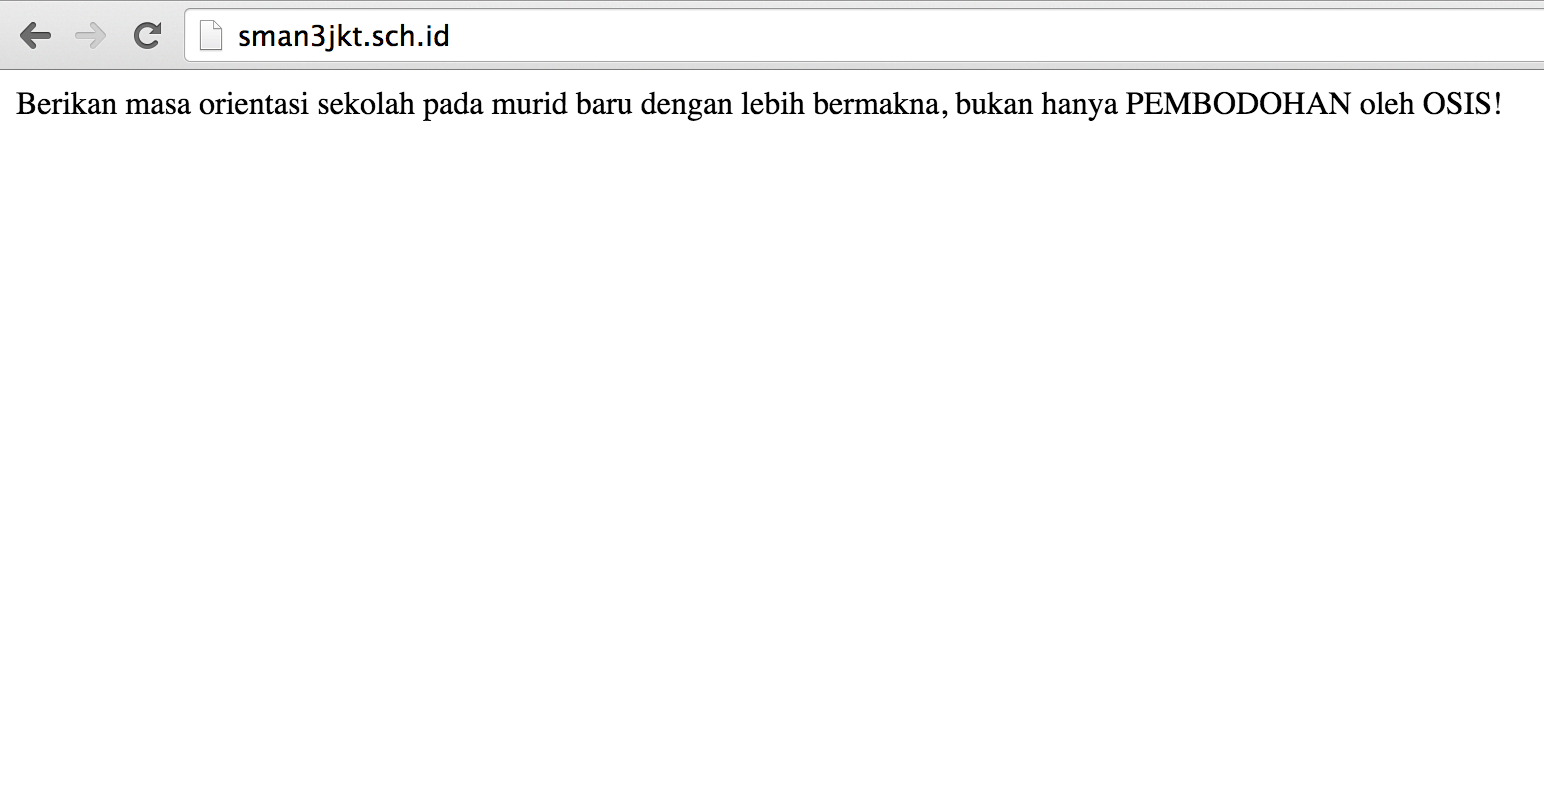 Situs SMAN 3 Jakarta di-hack. Screencshot dari sman3jkt.sch.id 